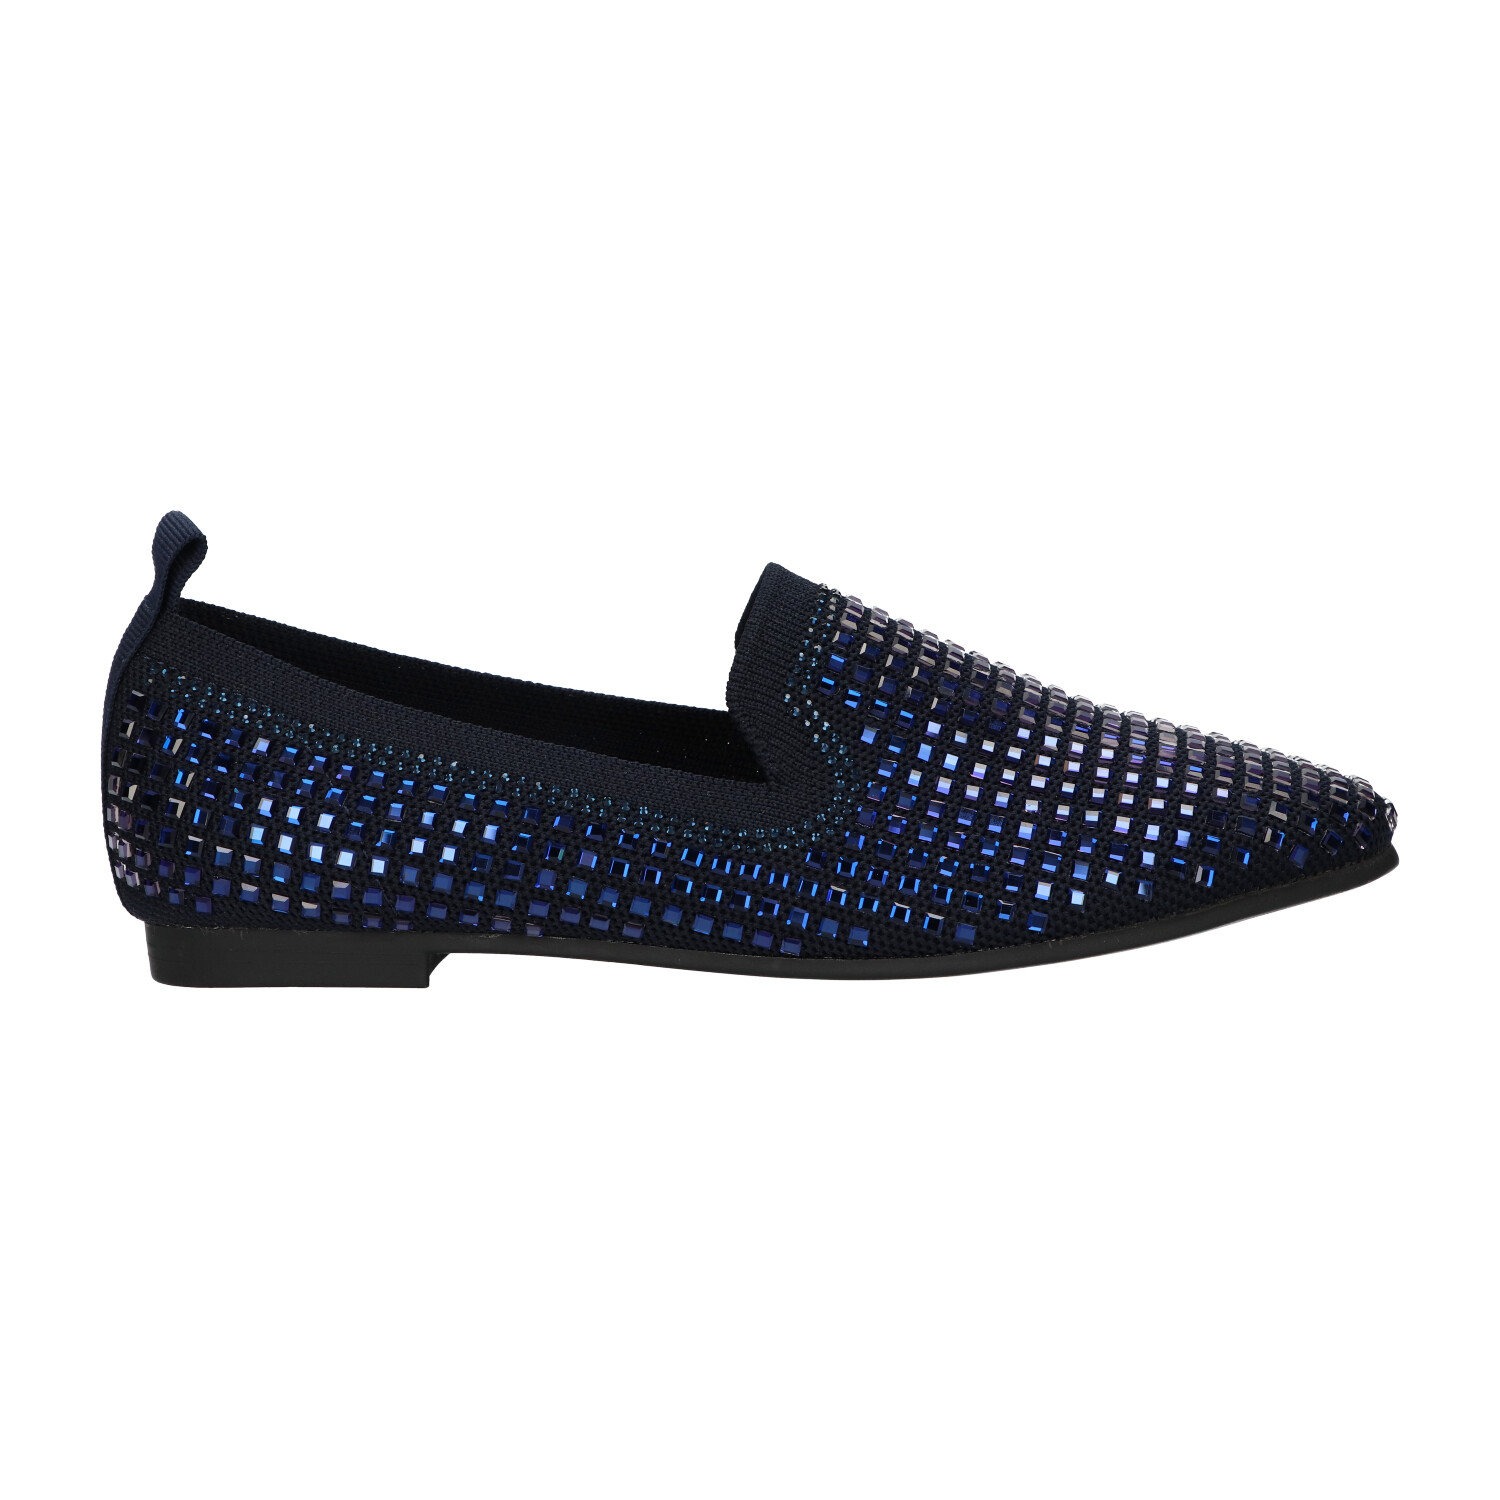 Knitted loafer blauw met steentjes